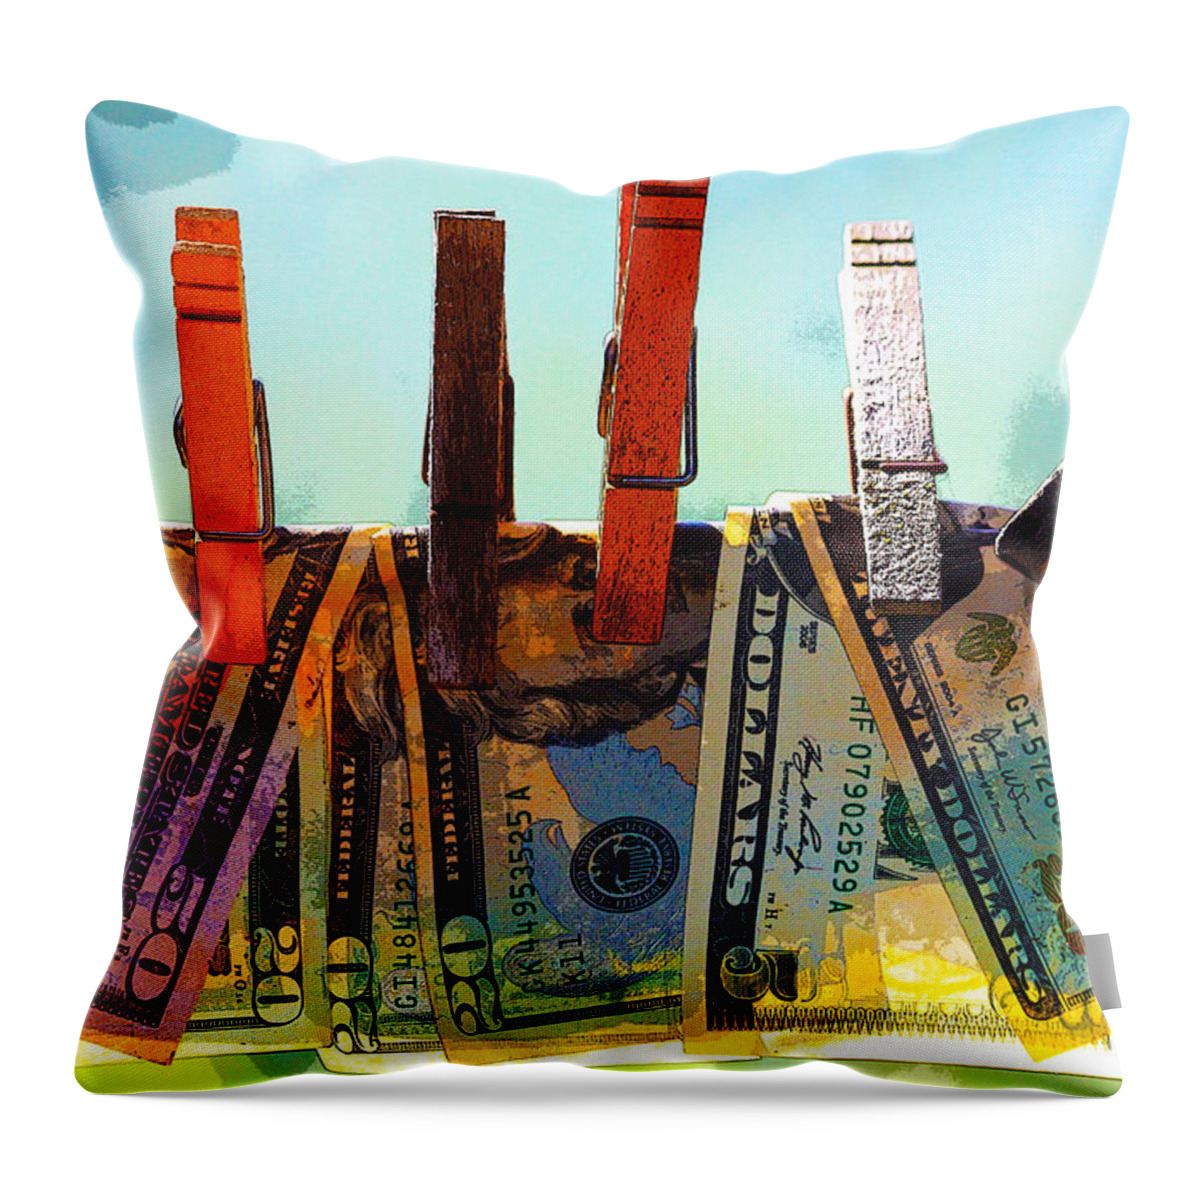 Clothespins Throw Pillow featuring the digital art Money Laundering by Karon Melillo DeVega